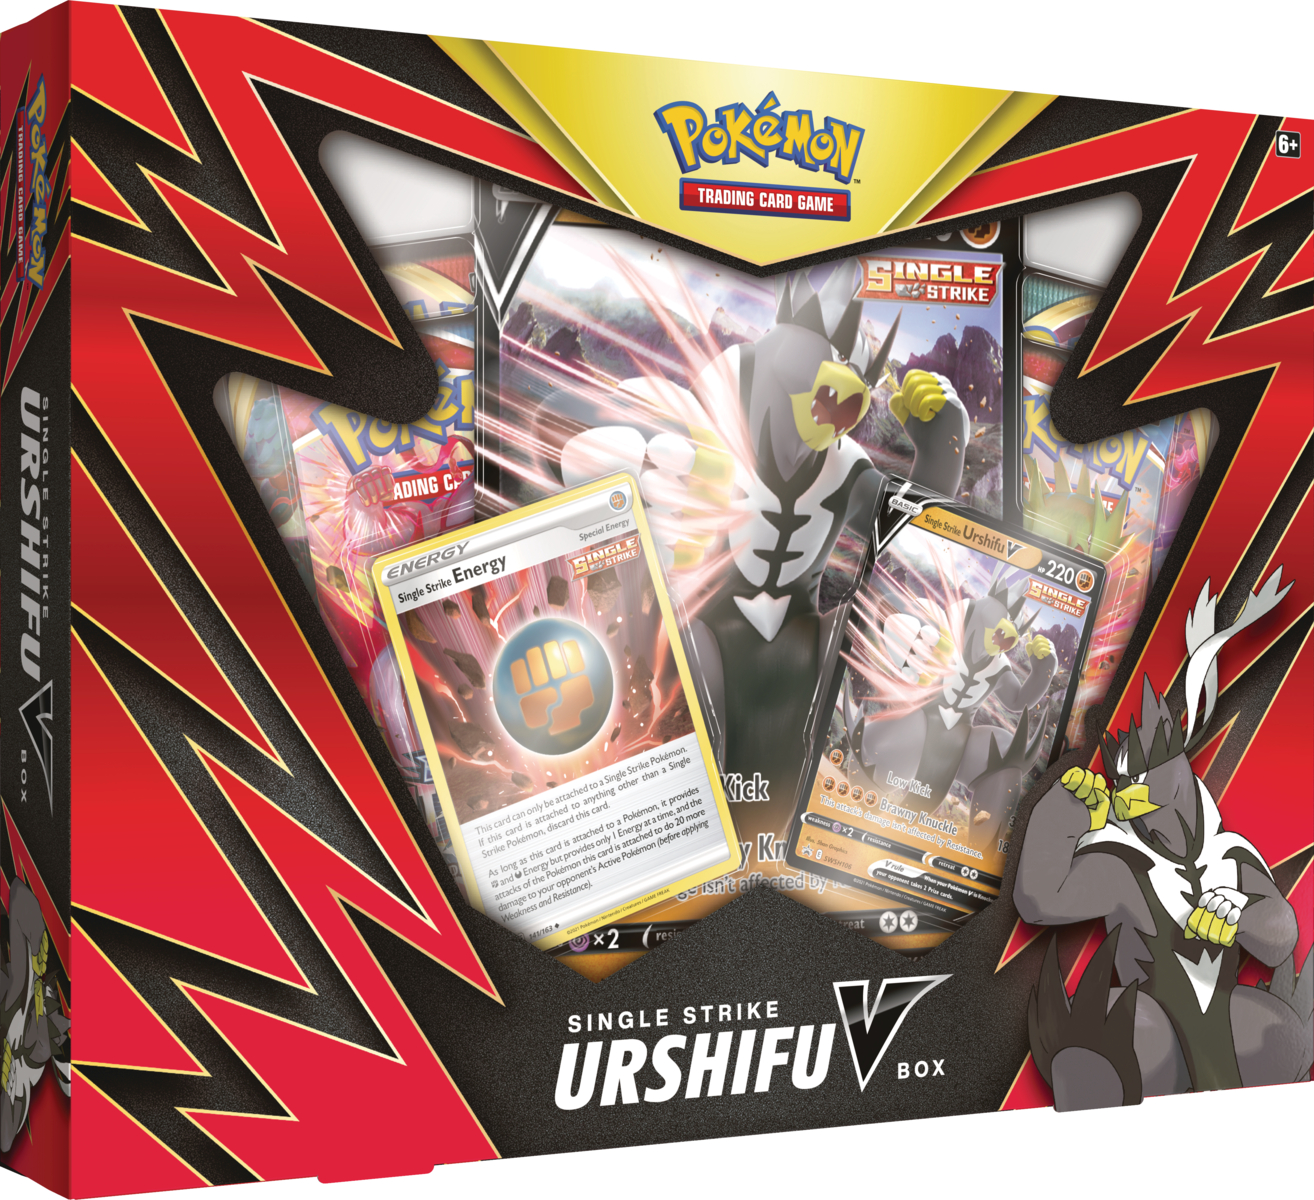 Pokémon Urshifu VMAX Premium Box 2-pack